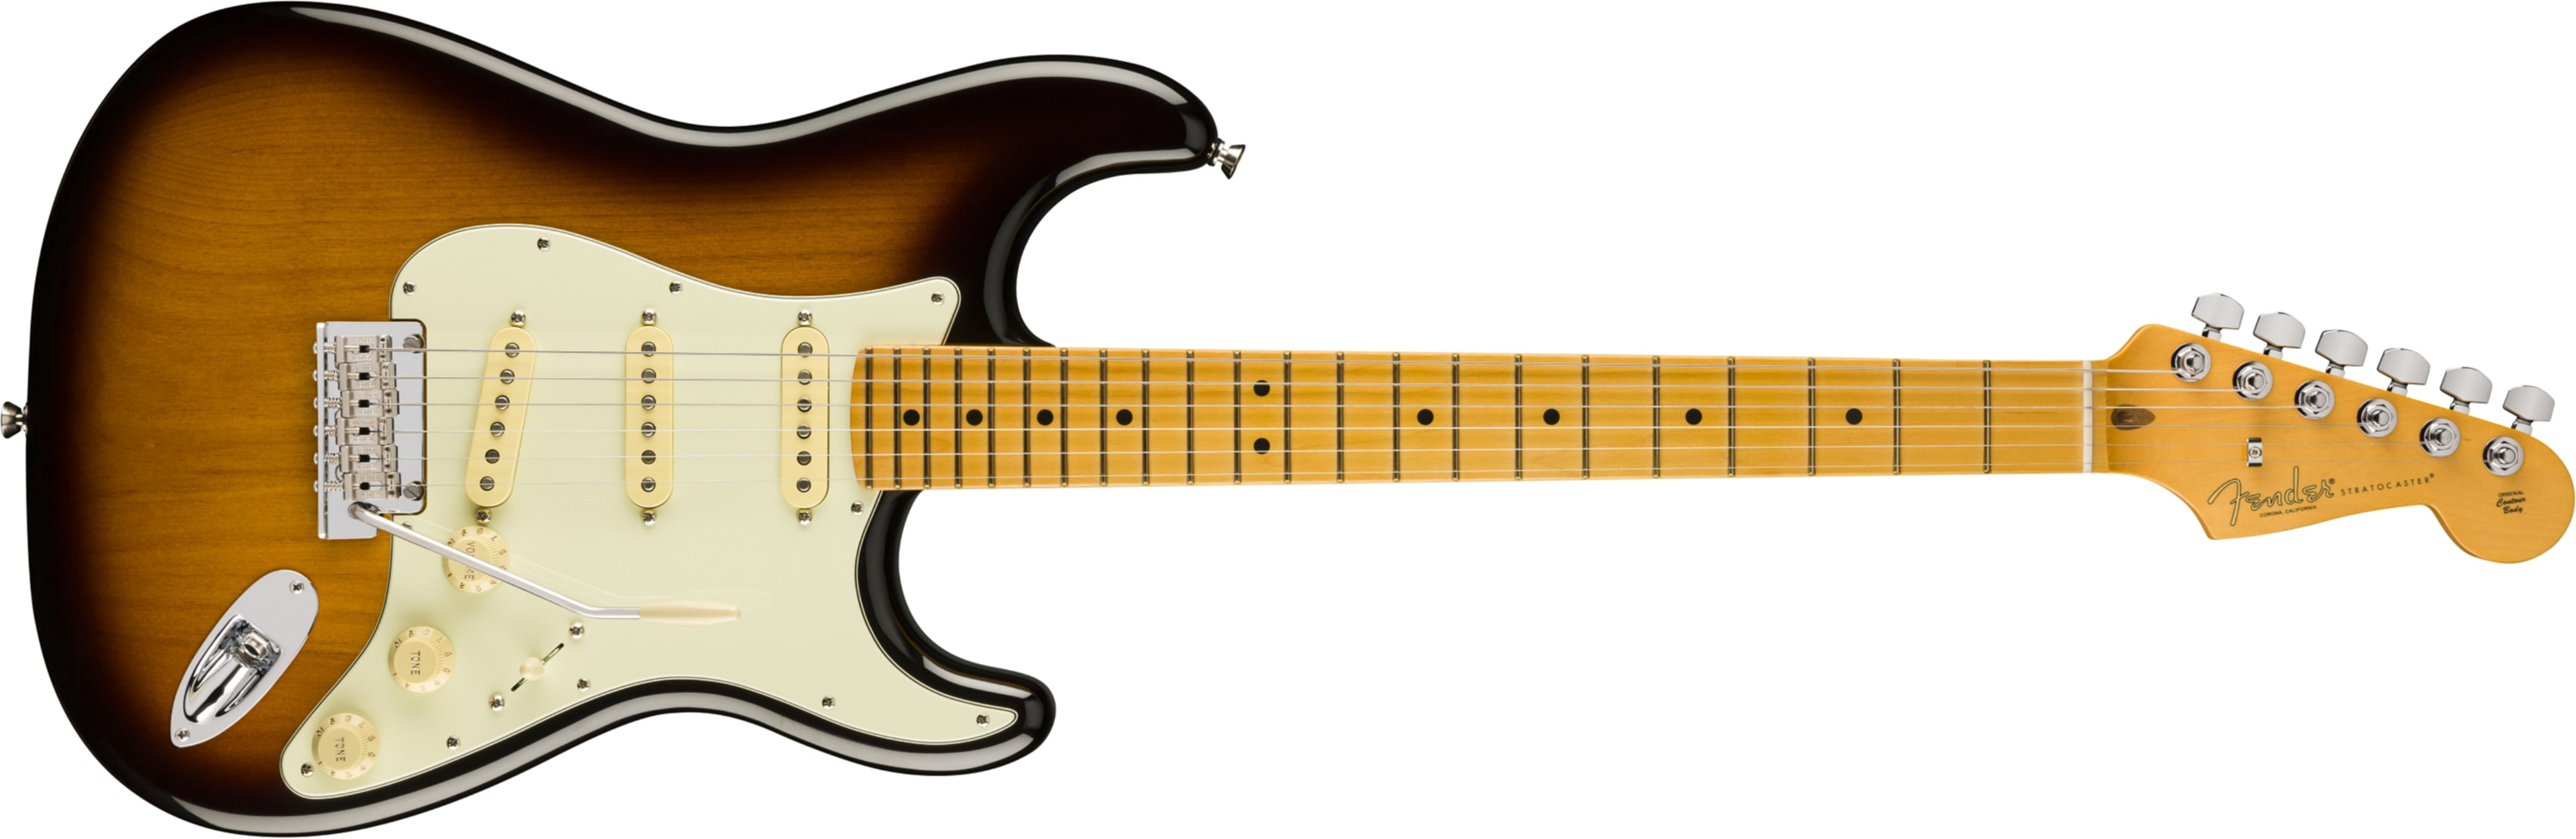 Fender Stratocaster American Pro Ii 70th Anniversary 3s Trem Mn - 2-color Sunburst - Elektrische gitaar in Str-vorm - Main picture